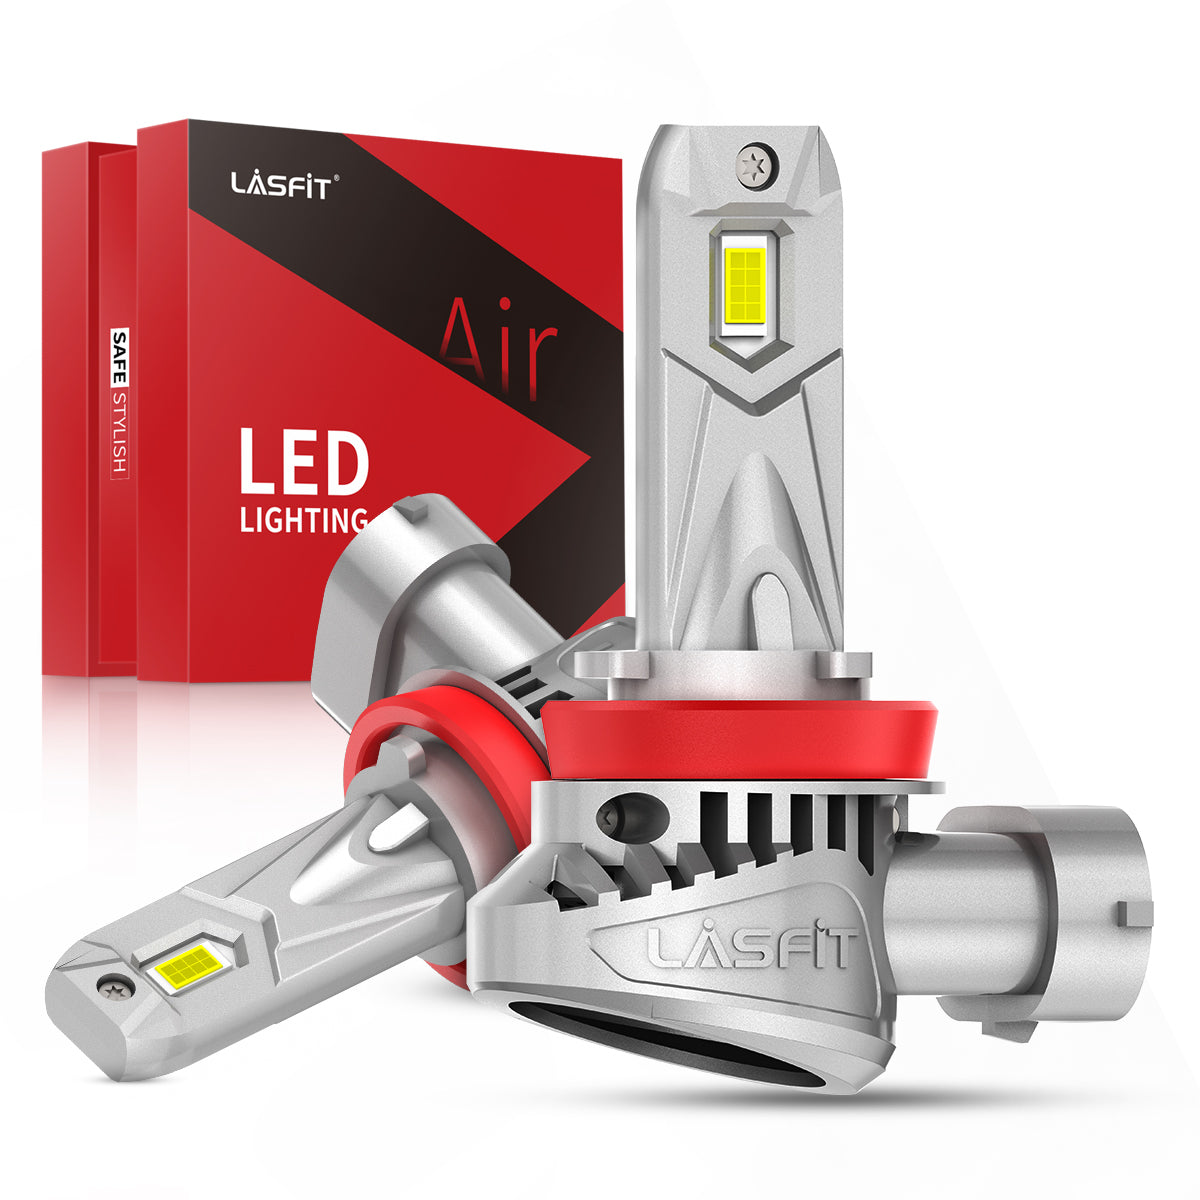 H7 LED Bulbs for Yamaha  LAair Series, All-in-One Design